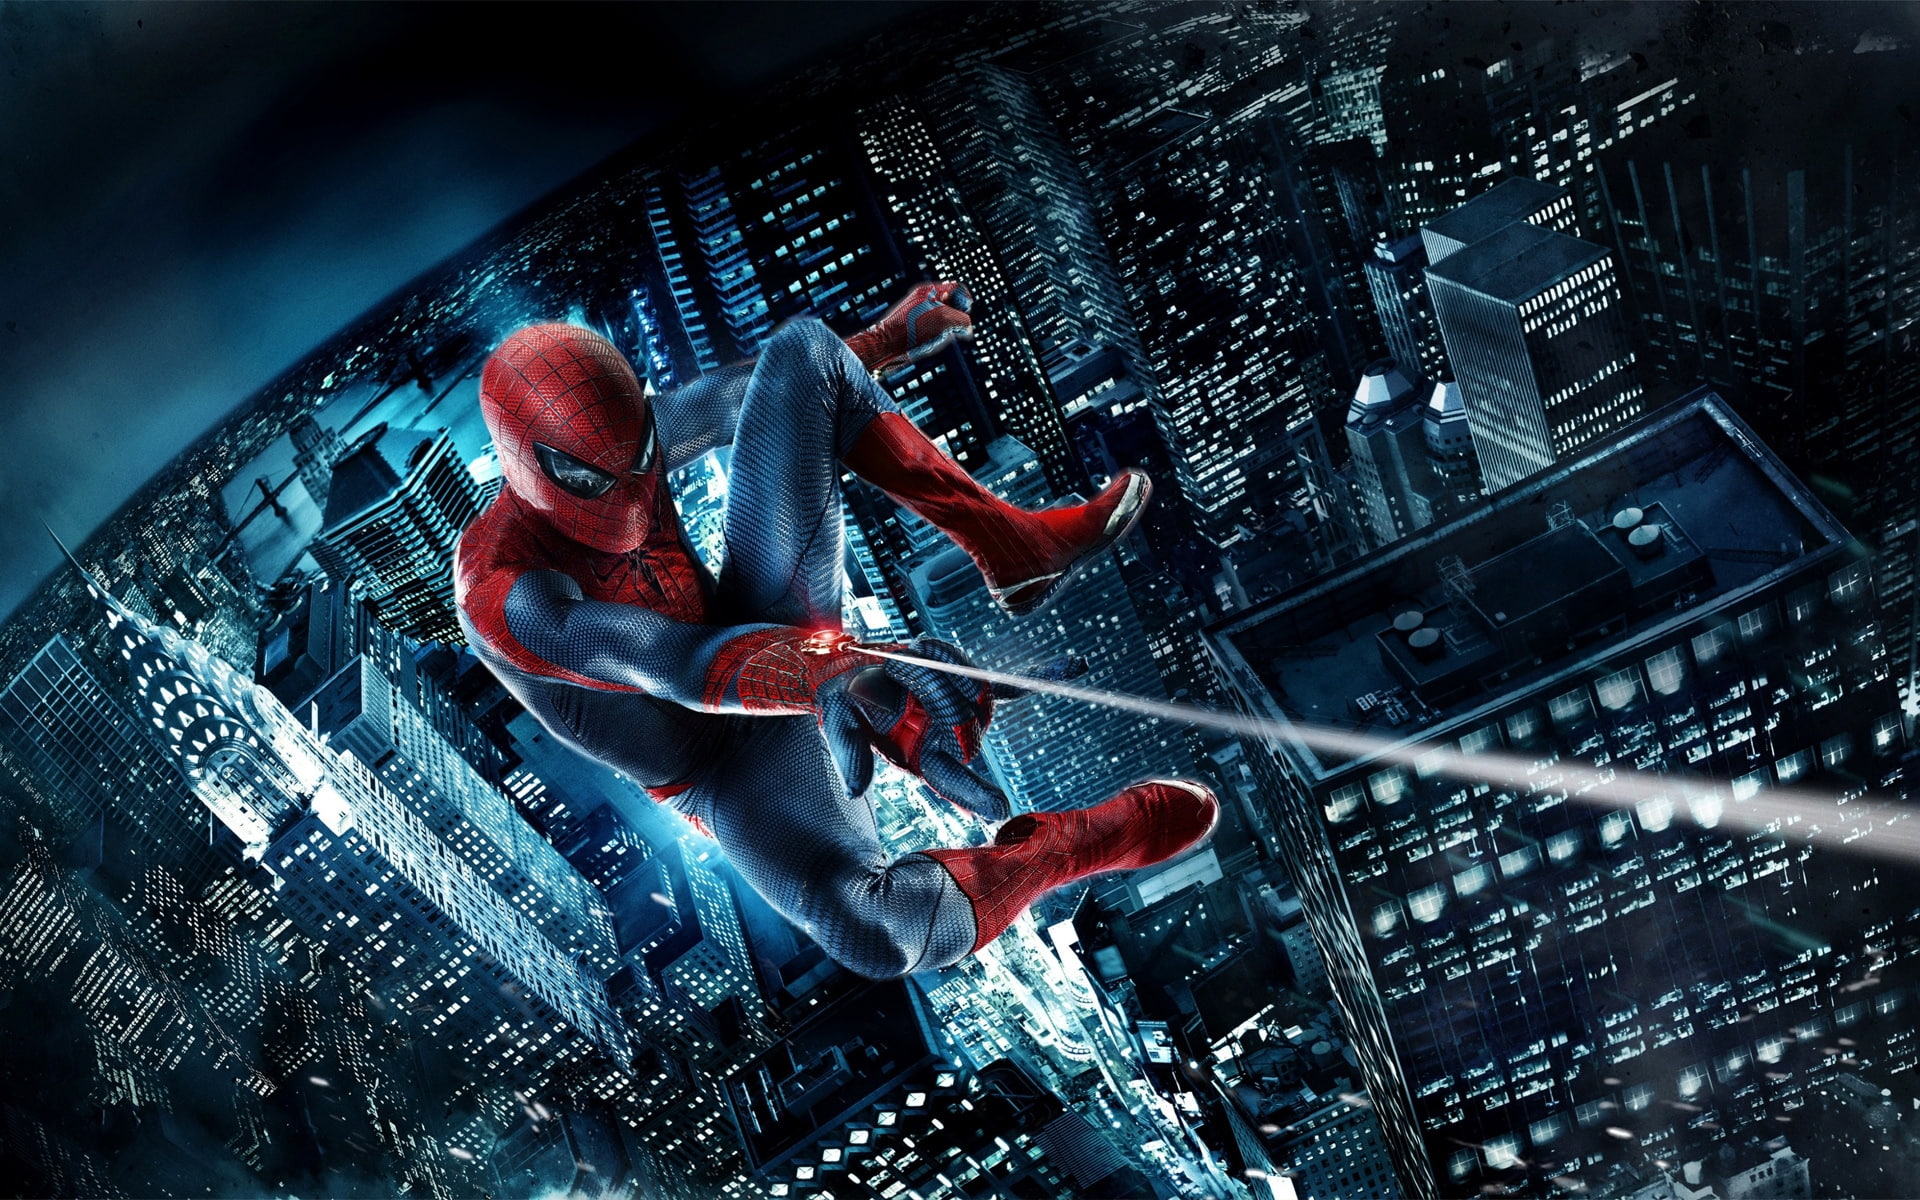 The Amazing SpiderMan 2, movies 2014